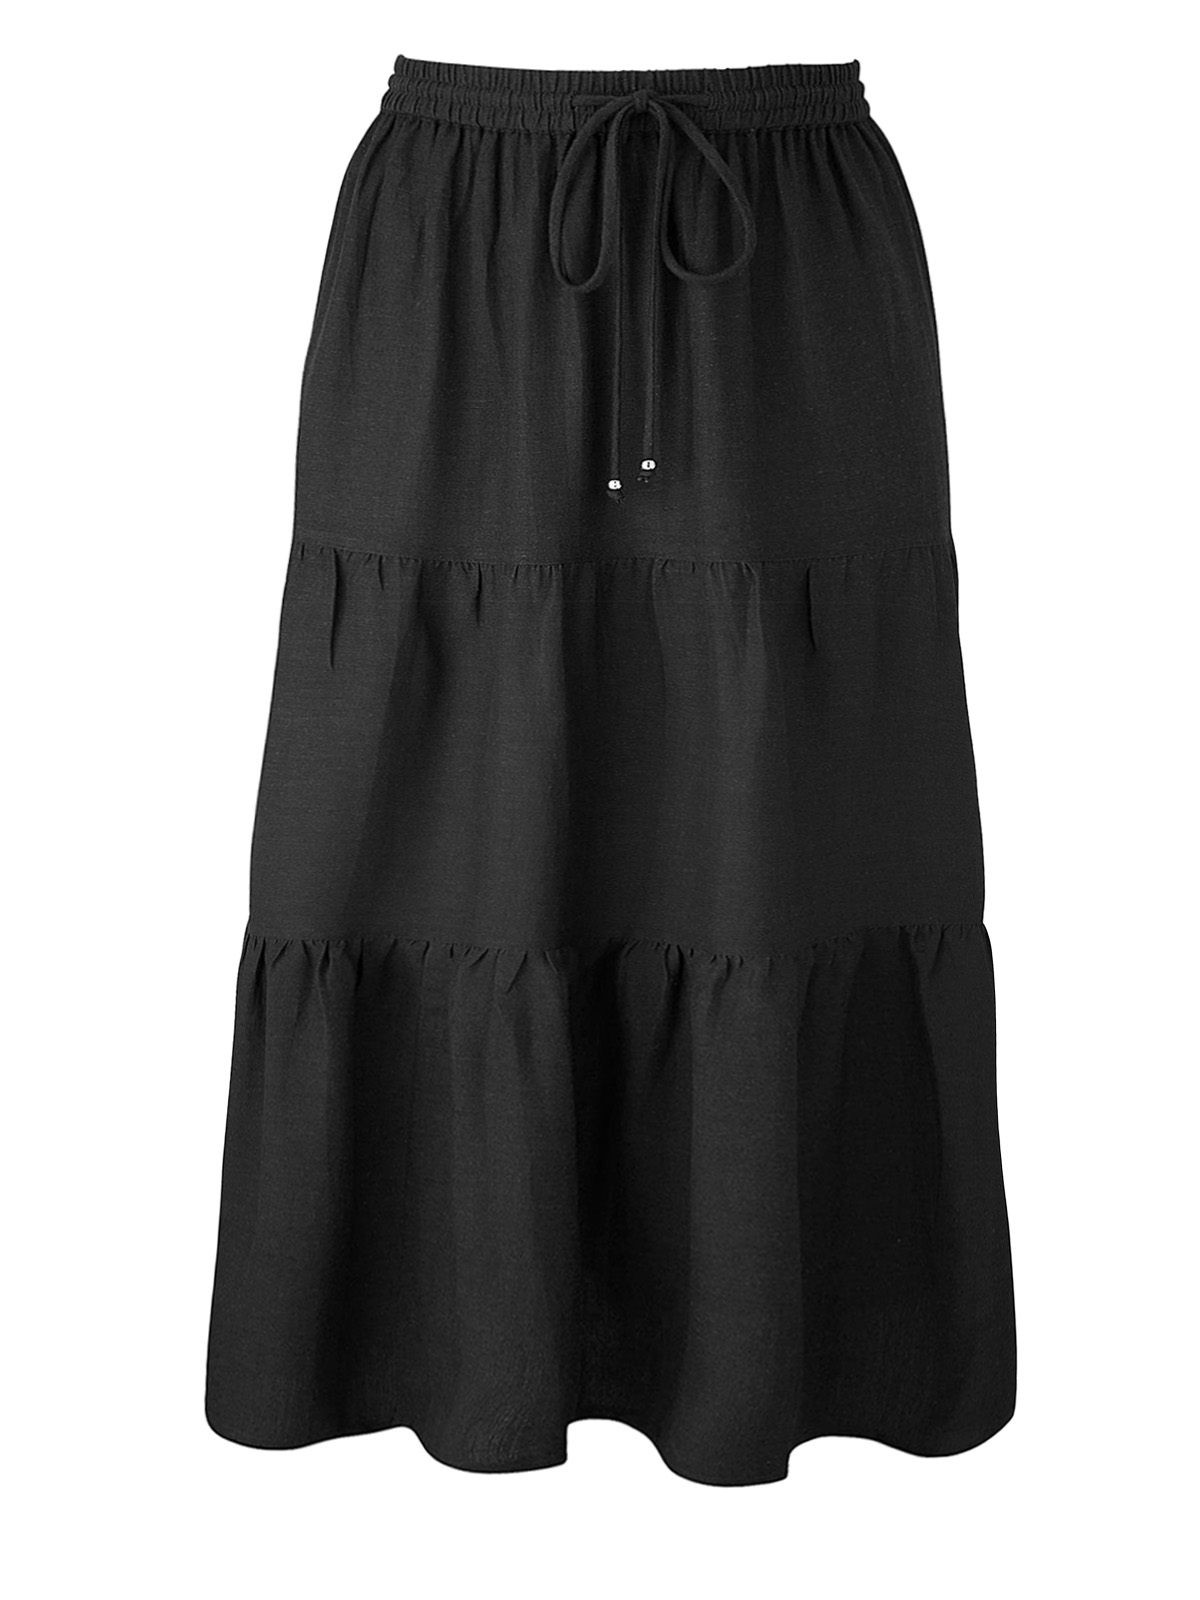 Wholesale Plus Size Boutique Clothing By Anthology Black Linen Blend Tiered Skirt Plus